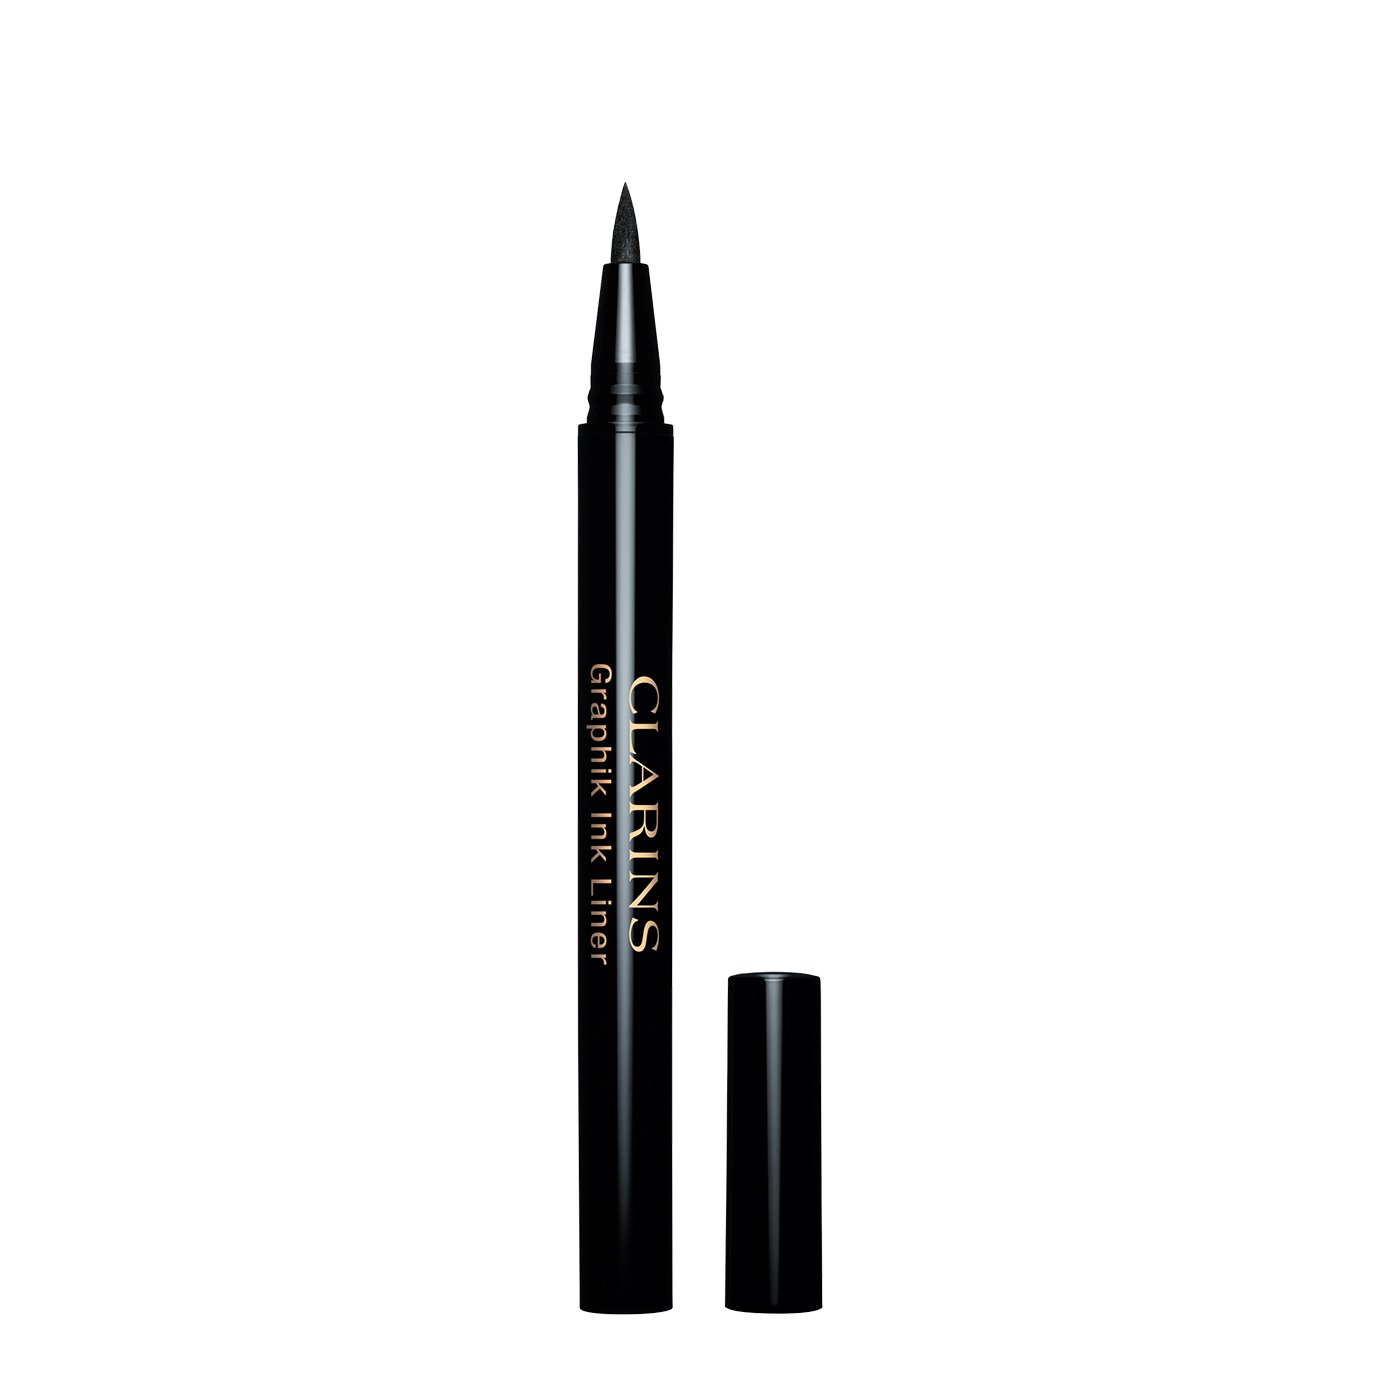 Graphik Ink Pen - Eyeliners | CLARINS®